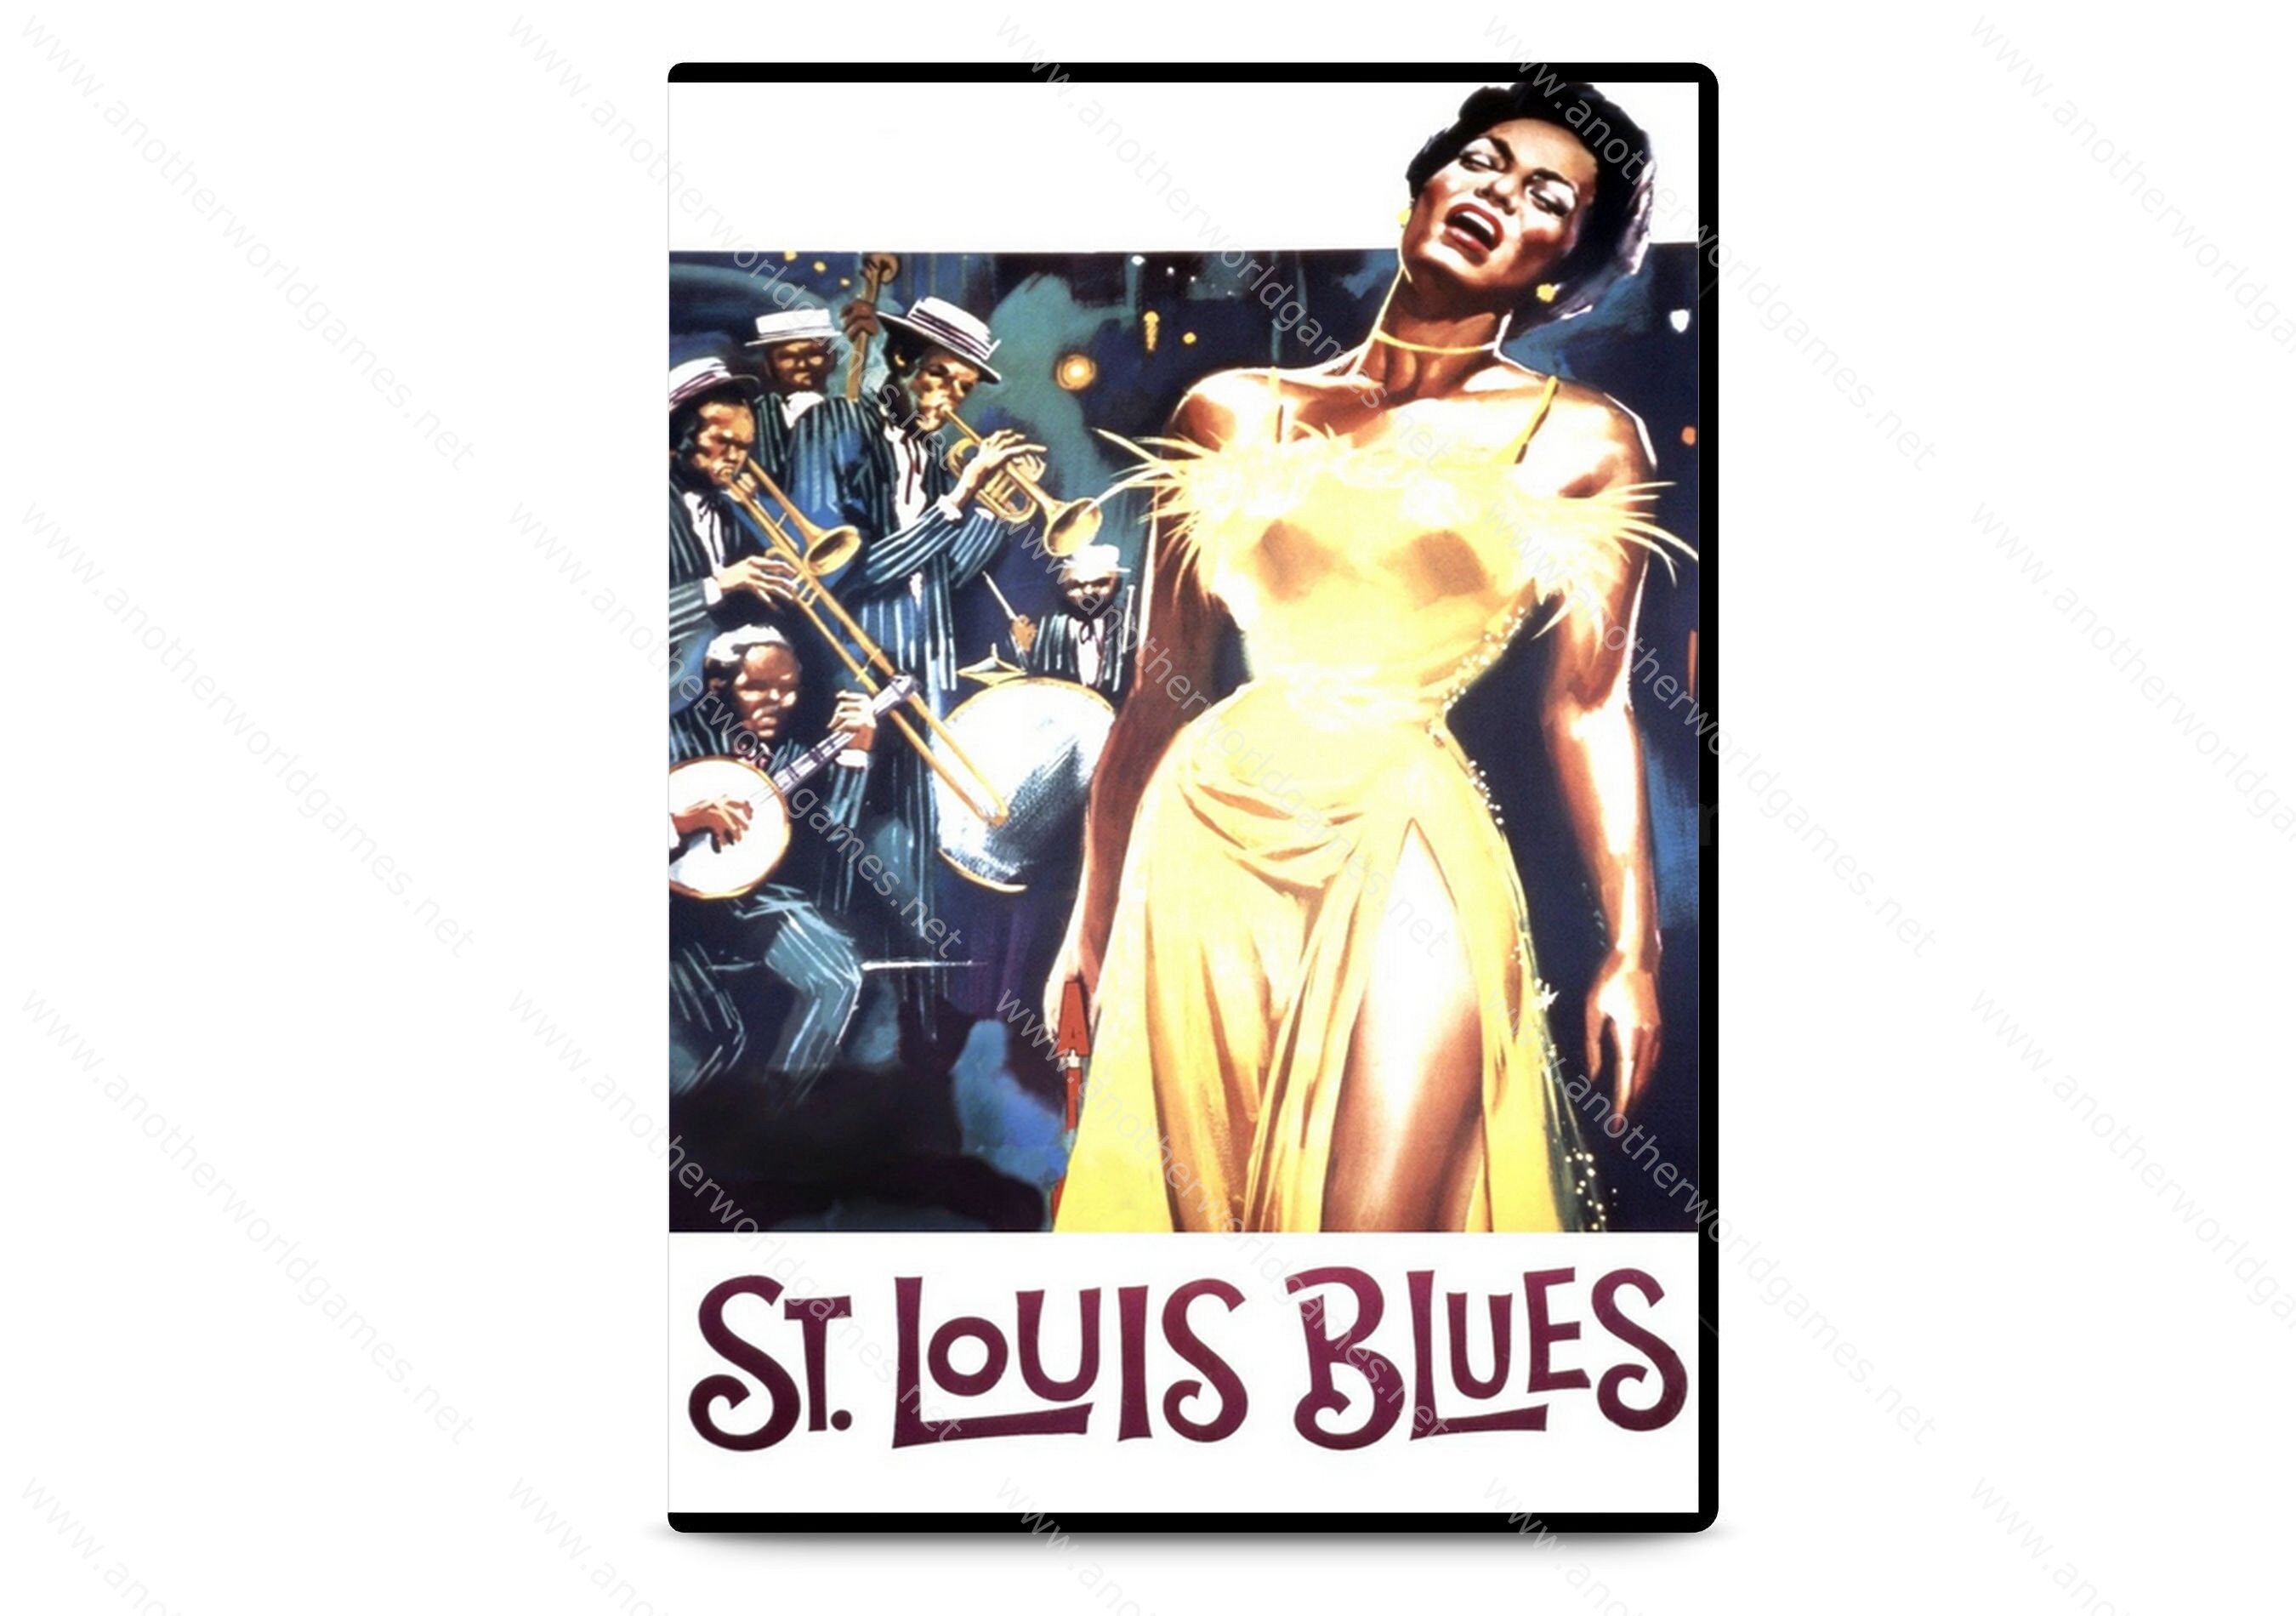 St. Louis Blues'', 1958-b, 3d movie poster Onesie by Stars on Art - Pixels